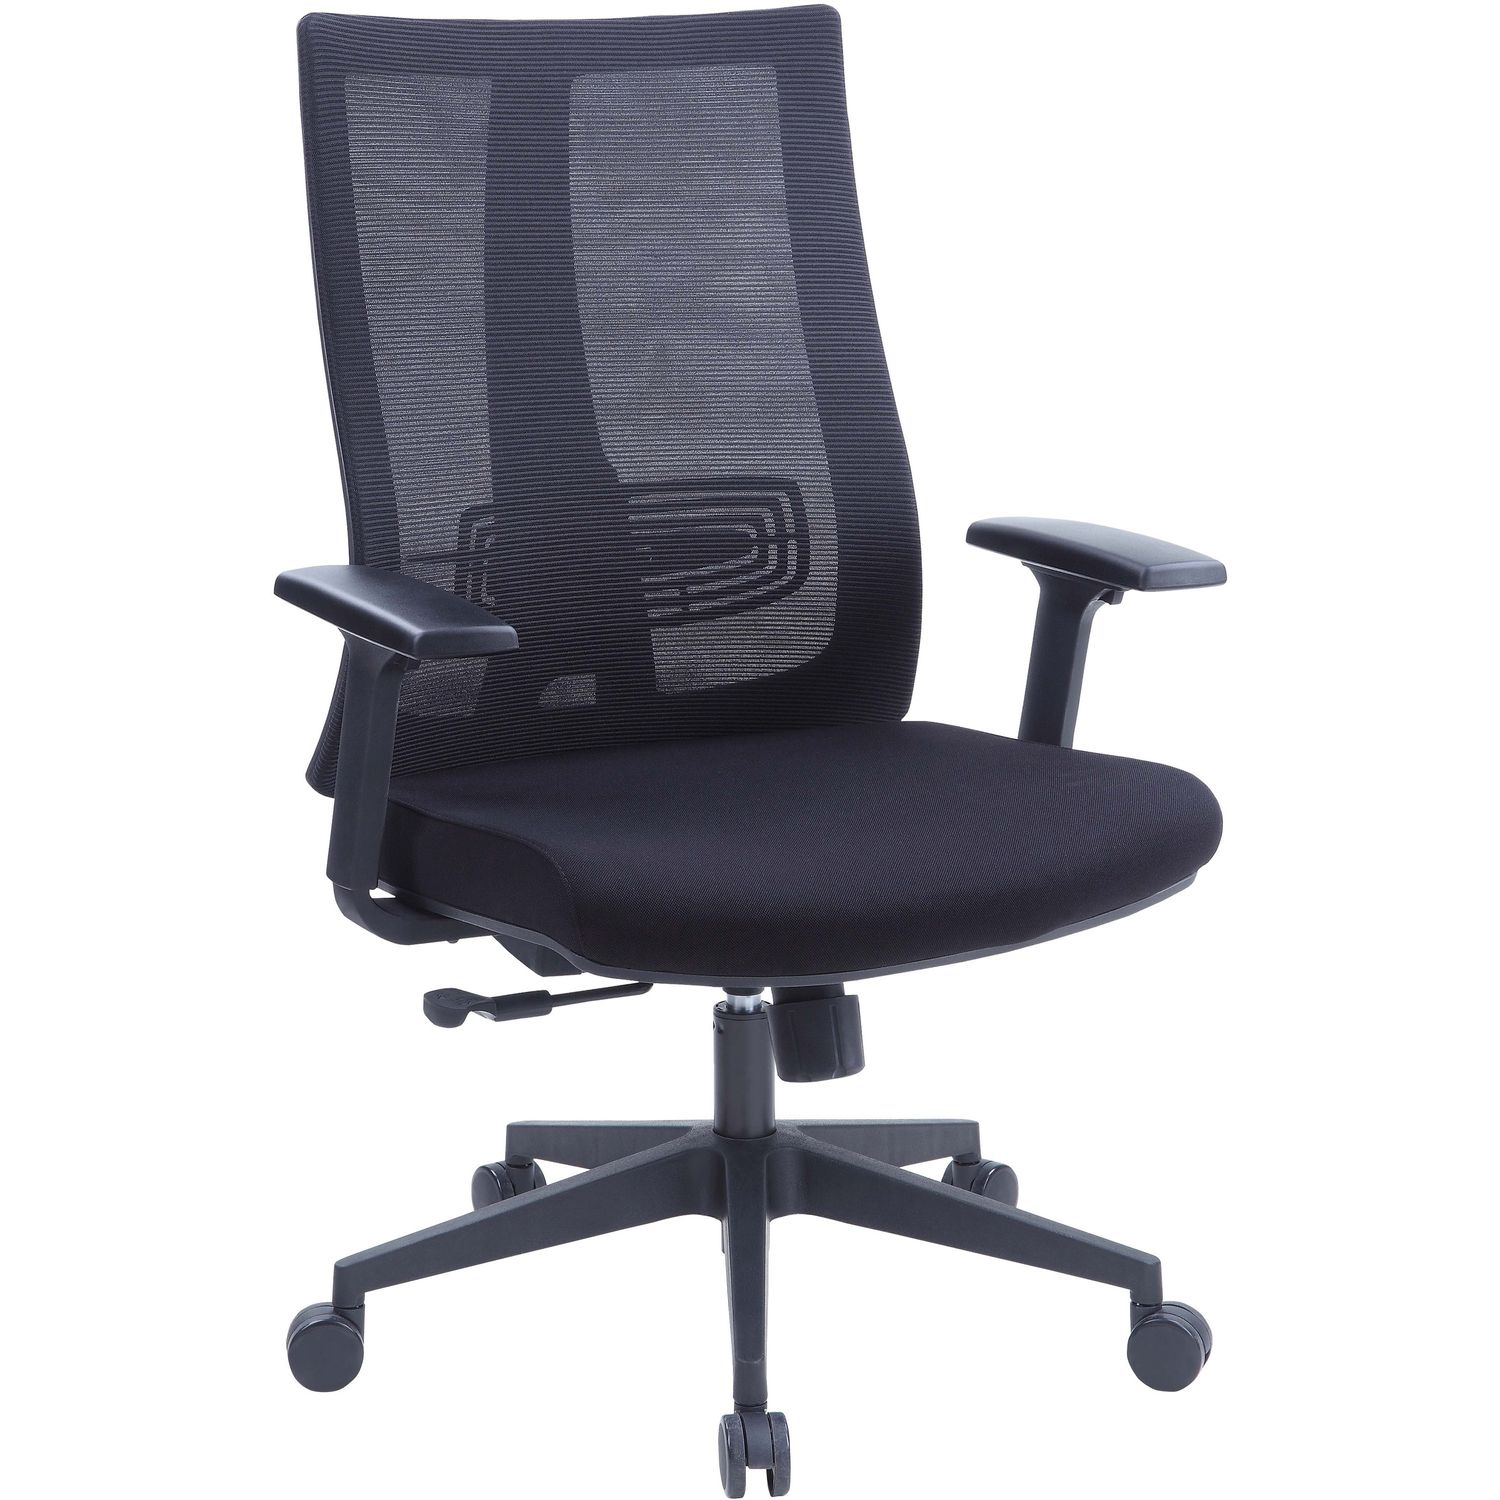 High-Back Molded Seat Chair Fabric Seat, High Back, 5-star Base, Black, Armrest, 1 Each